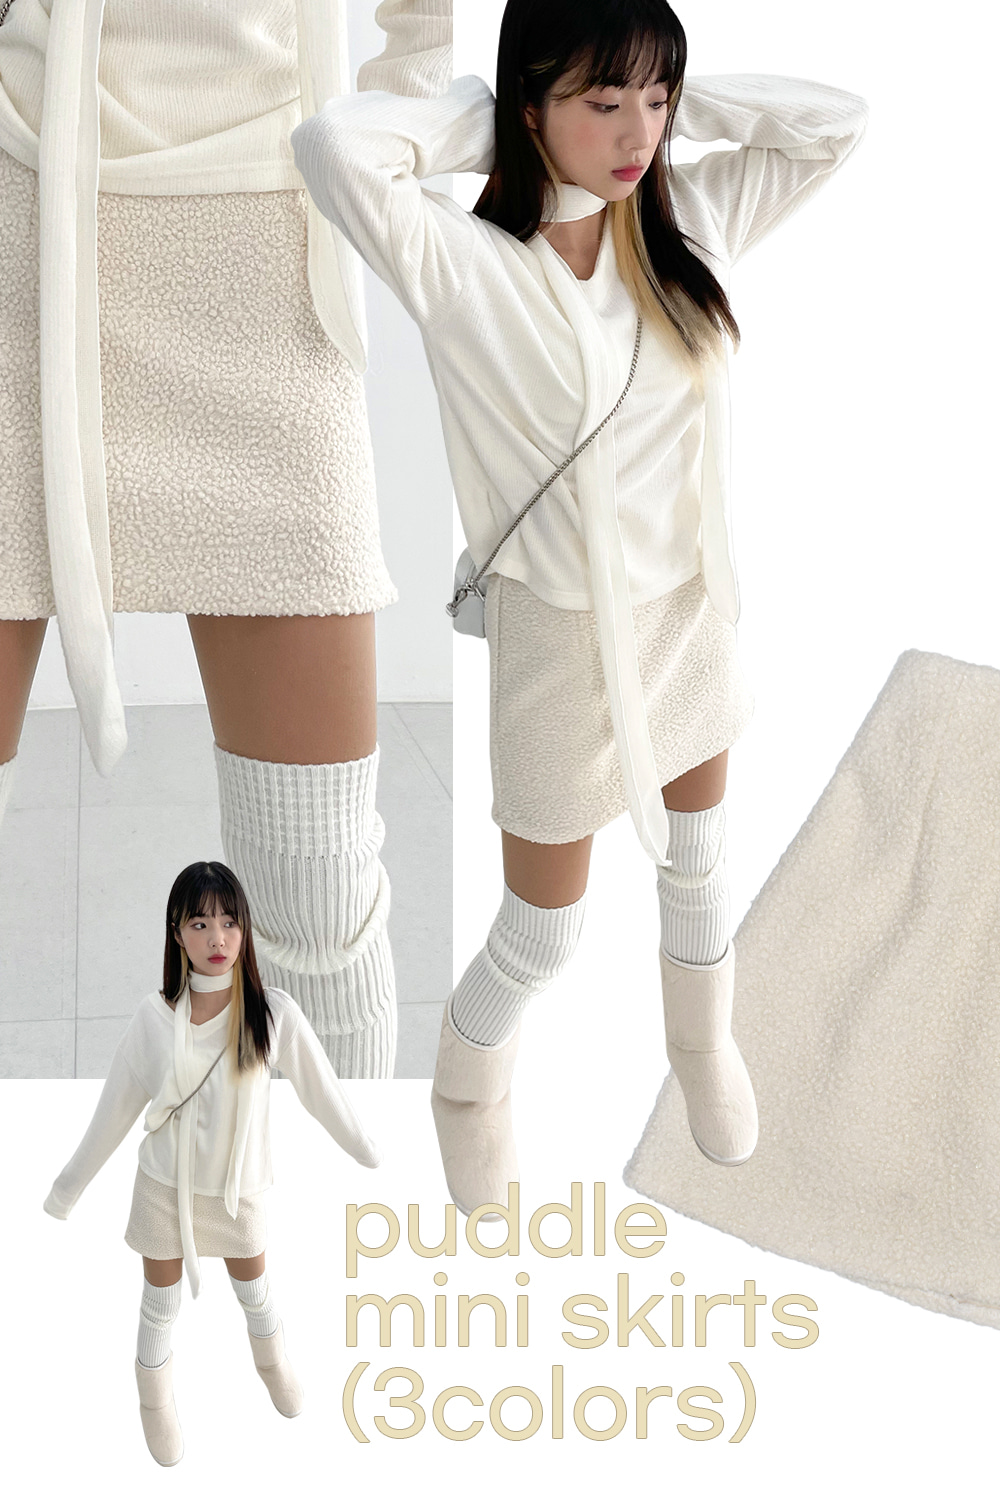 puddle mini skirts (3colors)